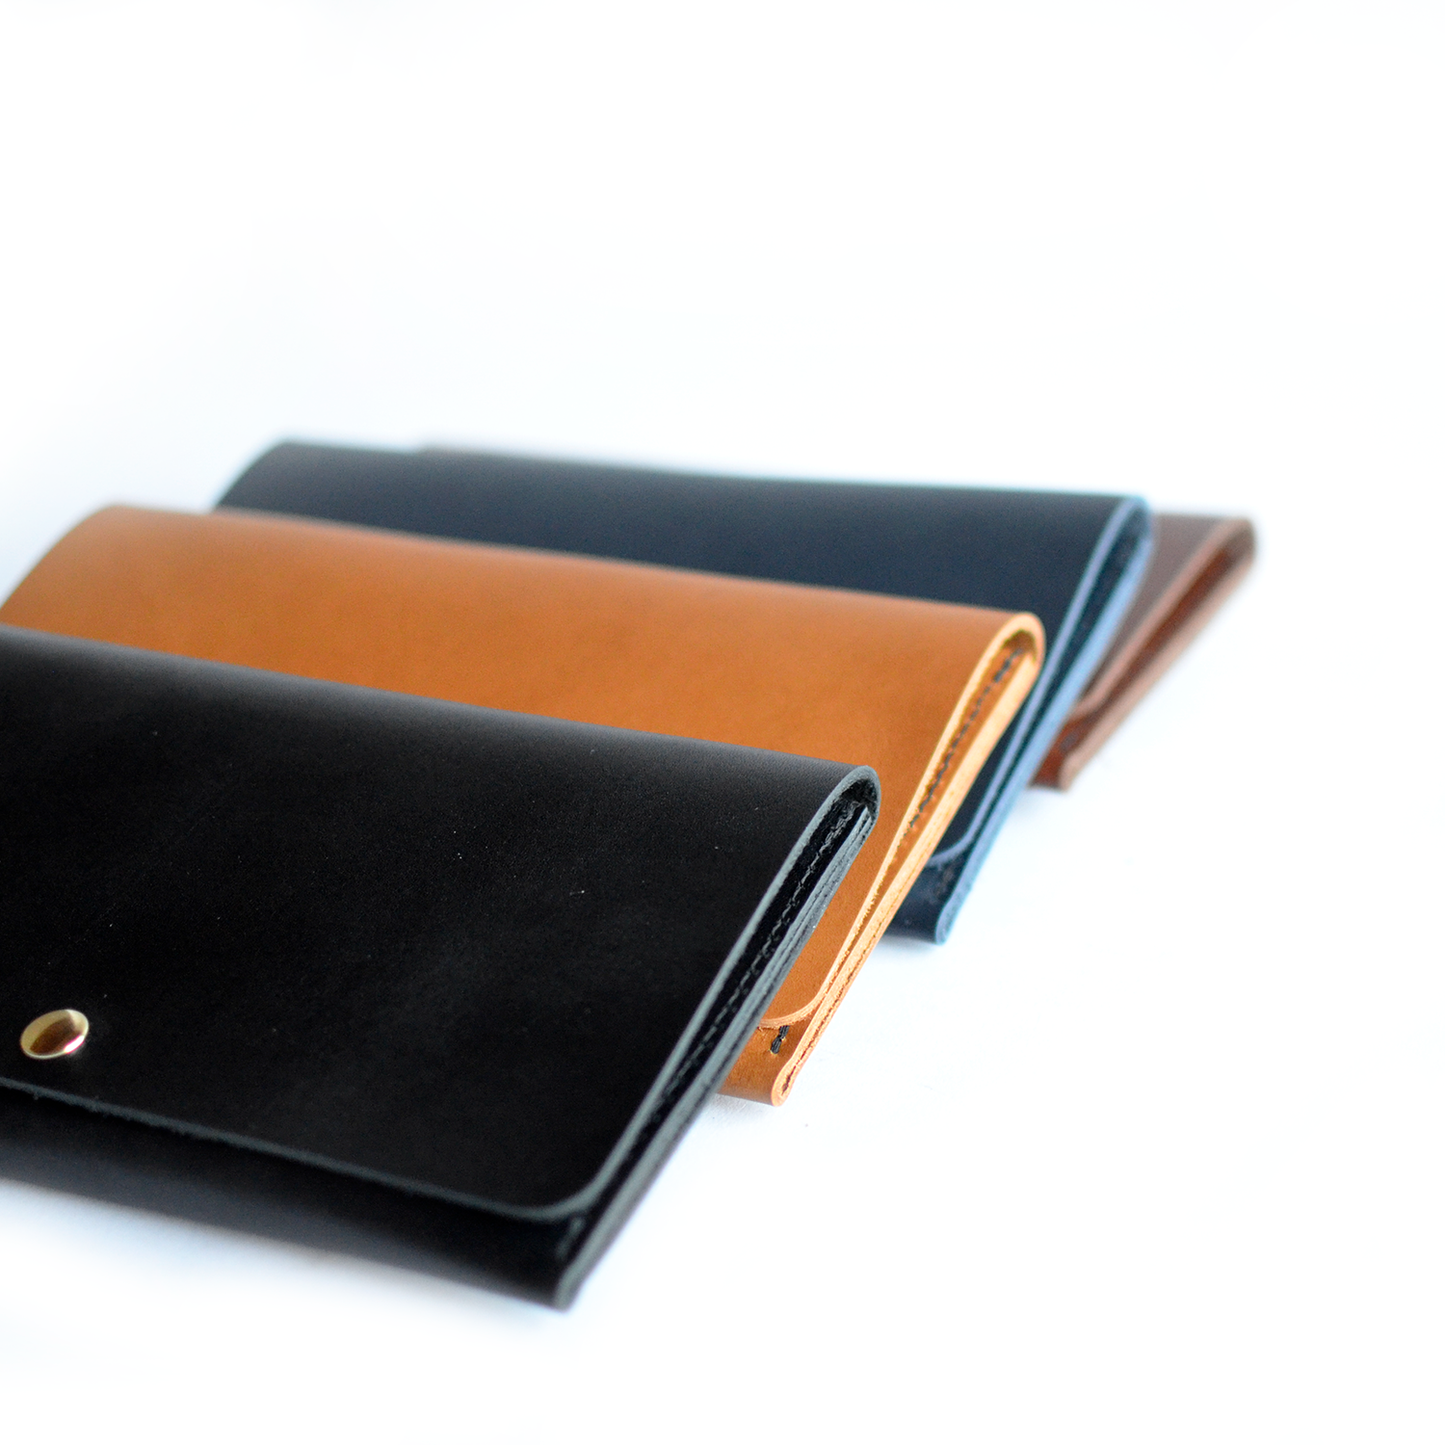 WILLOW 3-in-1 Wallet (+ clutch & crossbody) - Black Leather